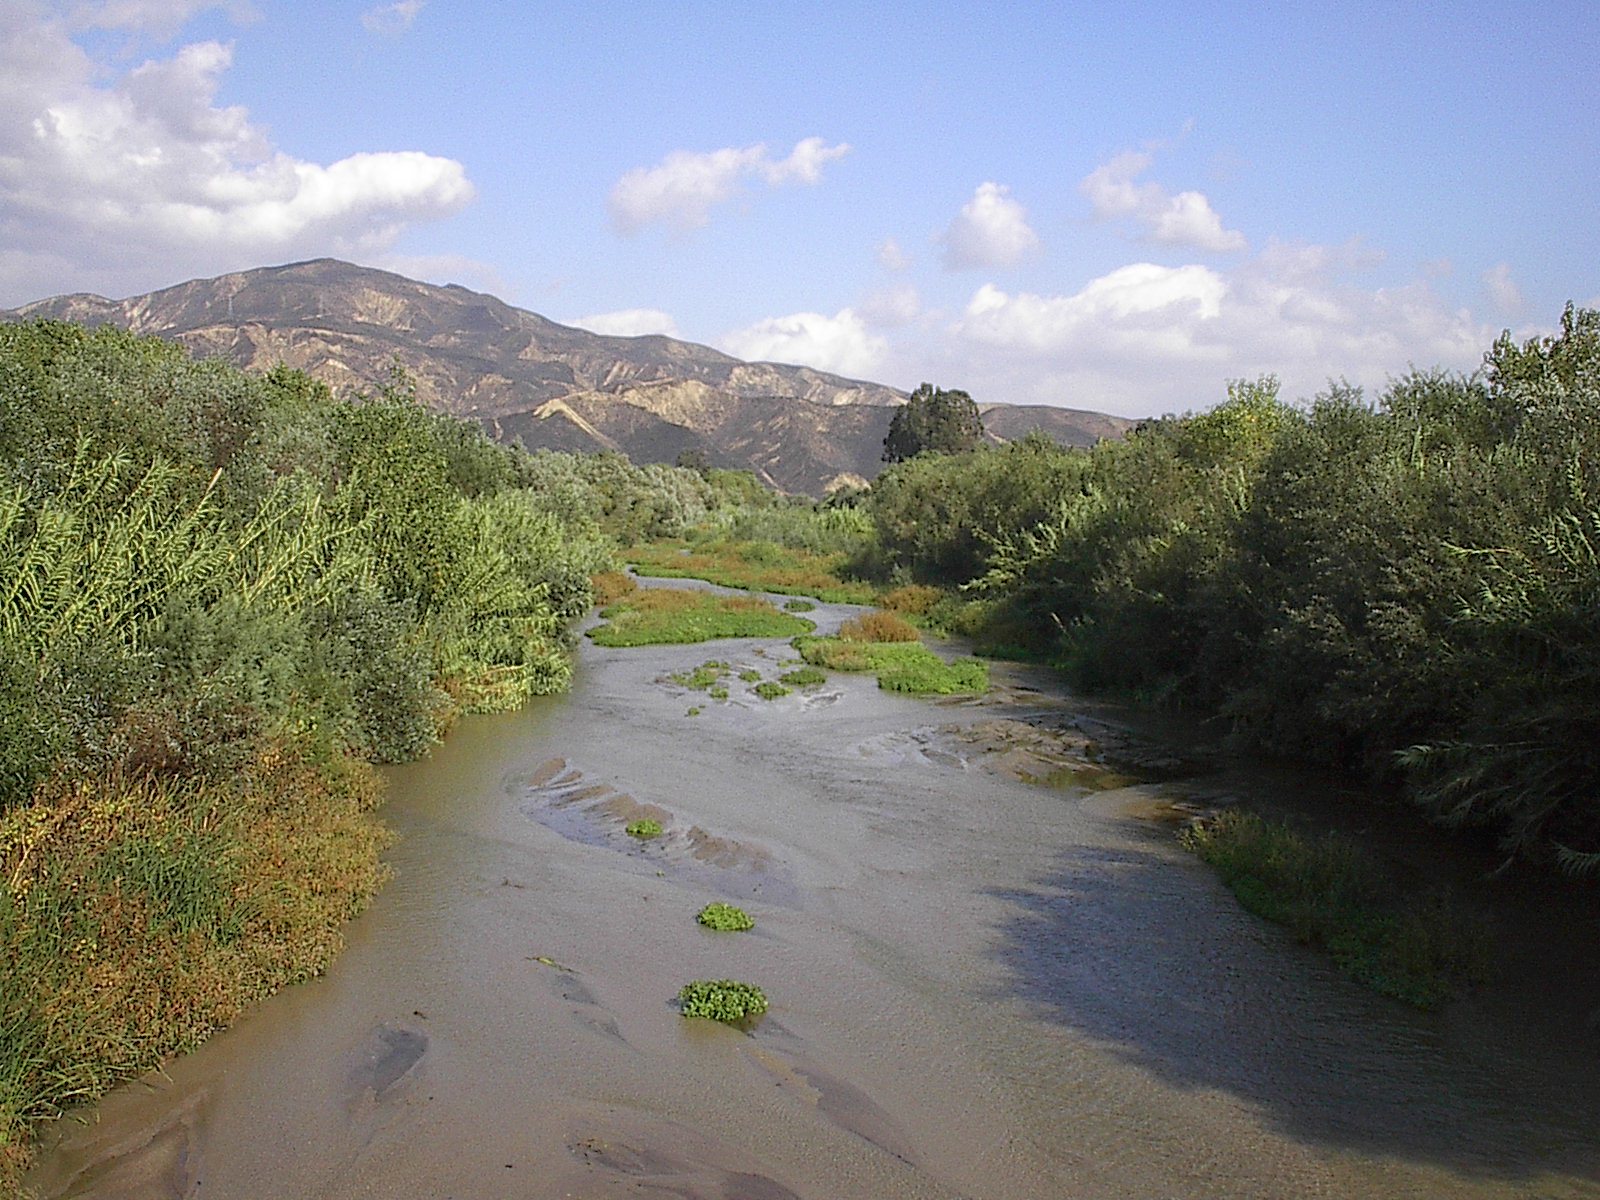 Santa Clara River near Lake Piru, Ventura County, California